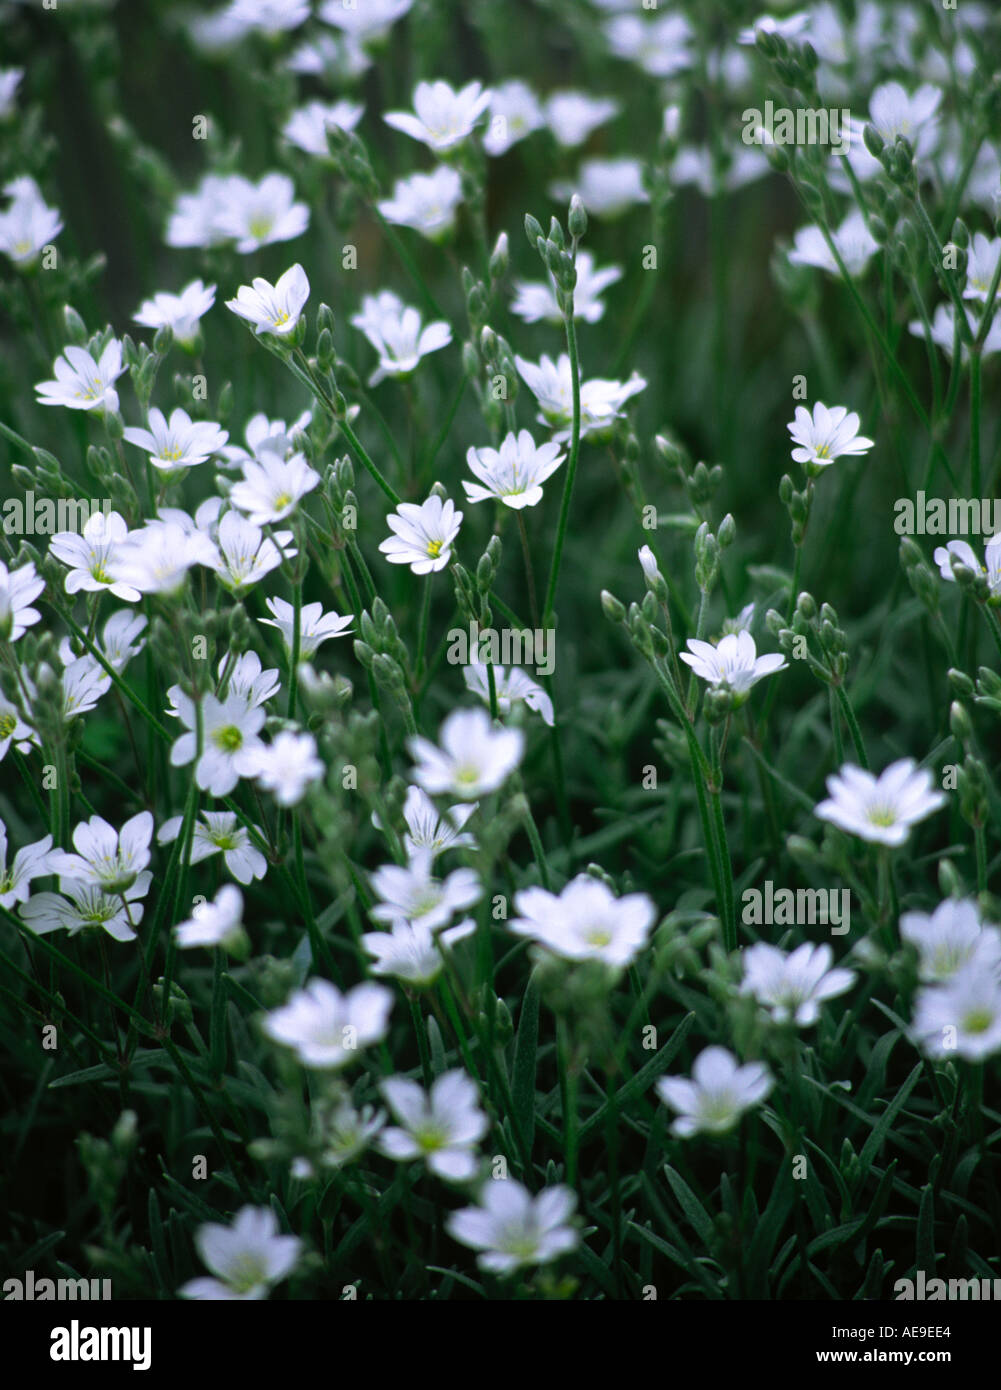 White saxifraga flowers growing in an English garden Stock Photo